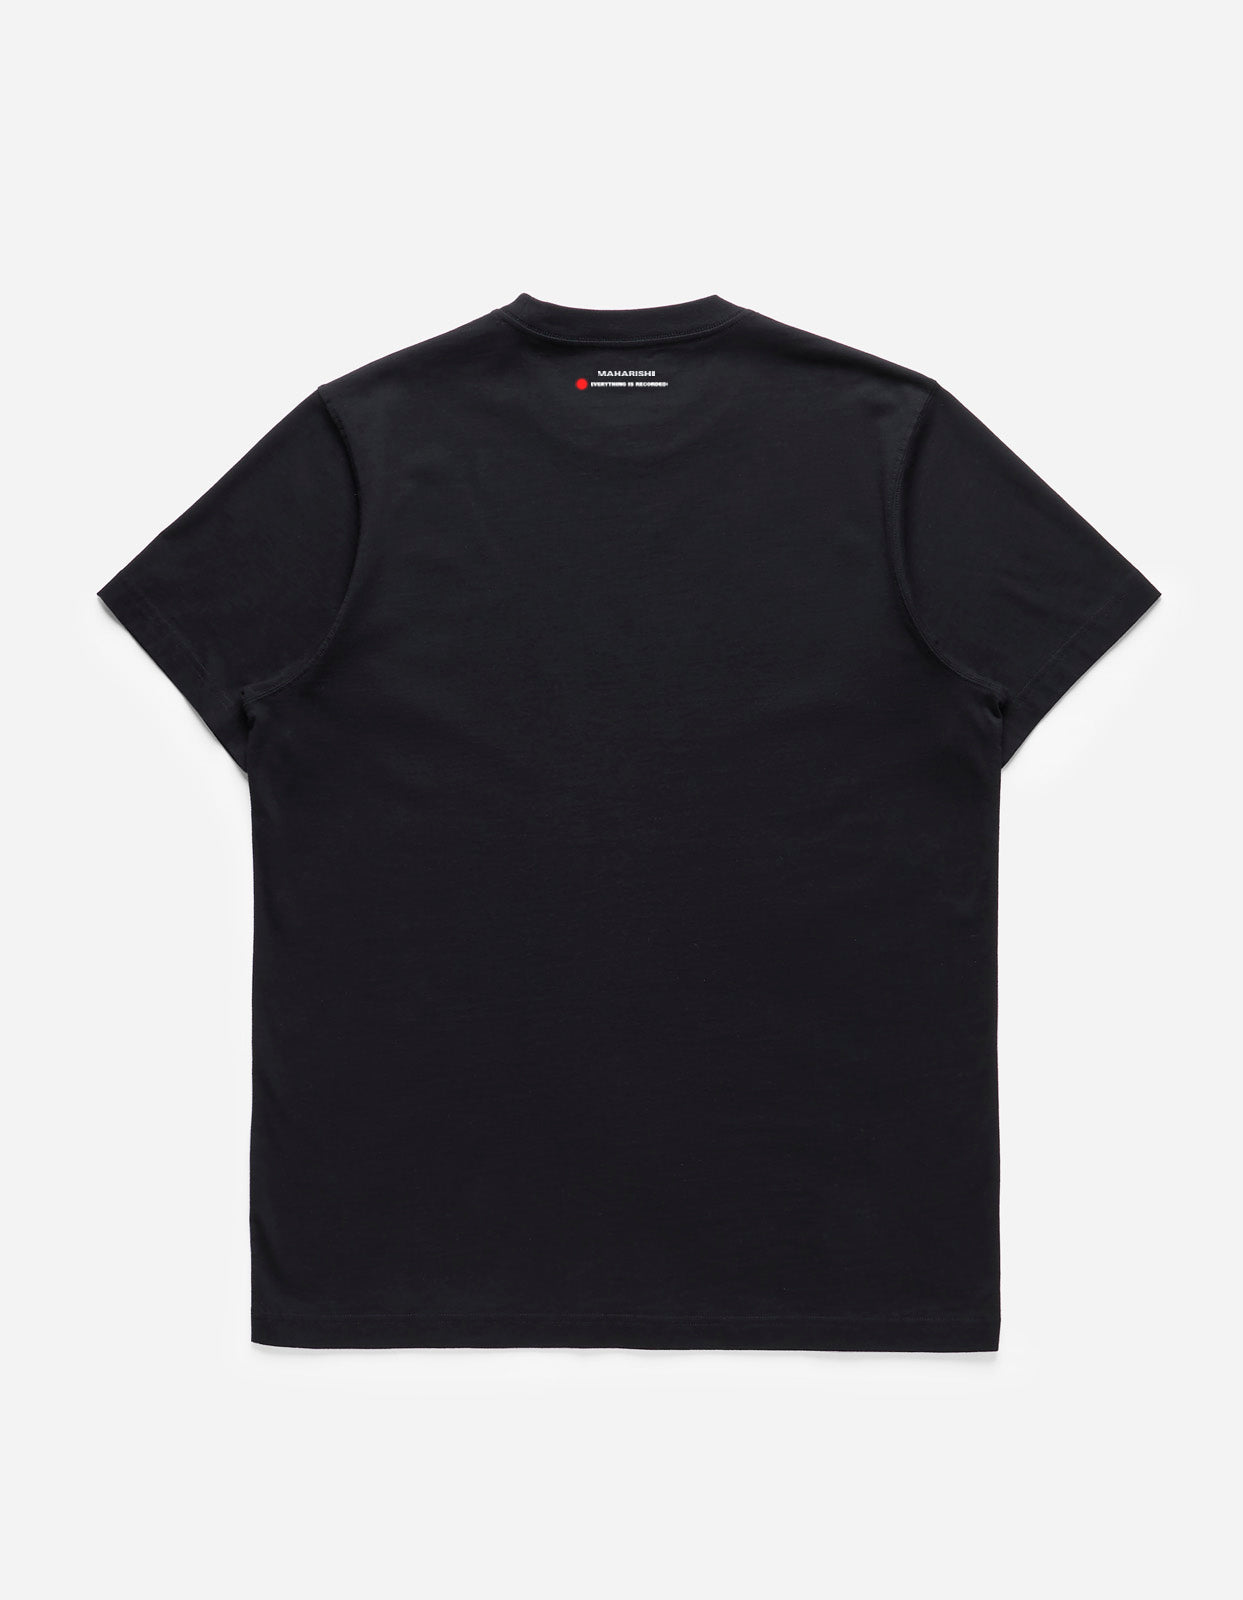 1315 Winter Solstice T-Shirt Black